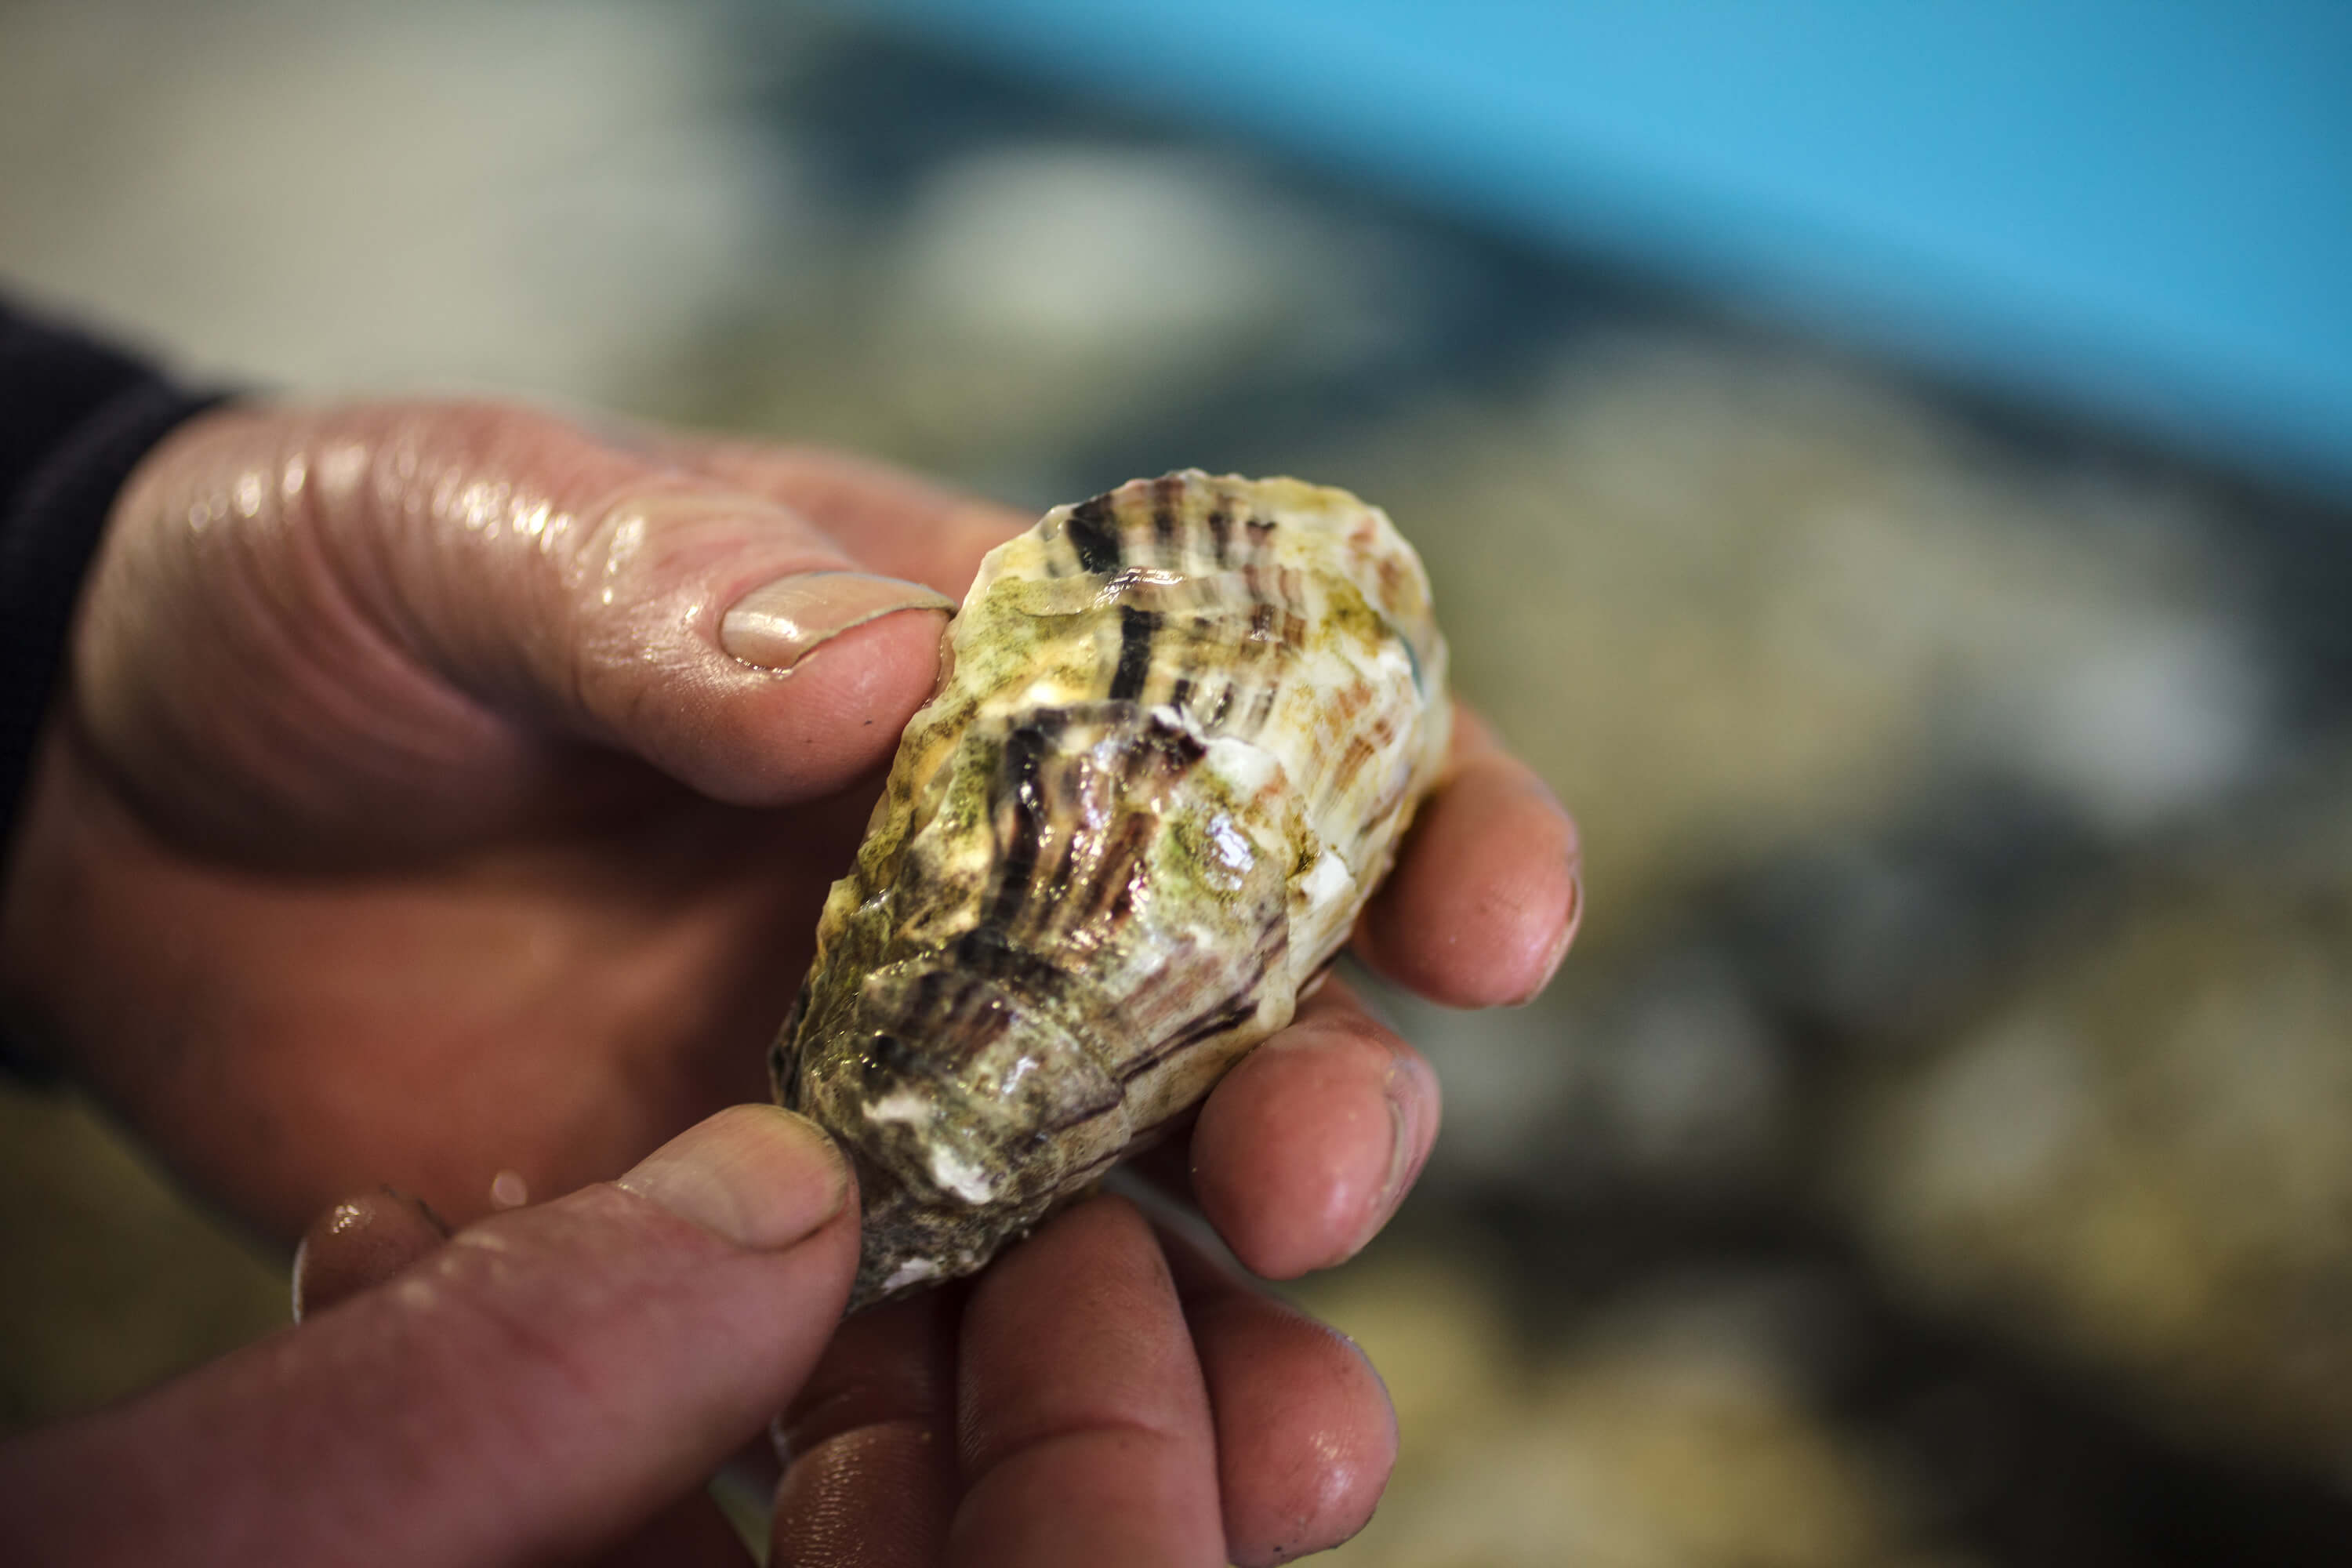 Irish Premium Oysters: Generational Secrets of Oyster Farming